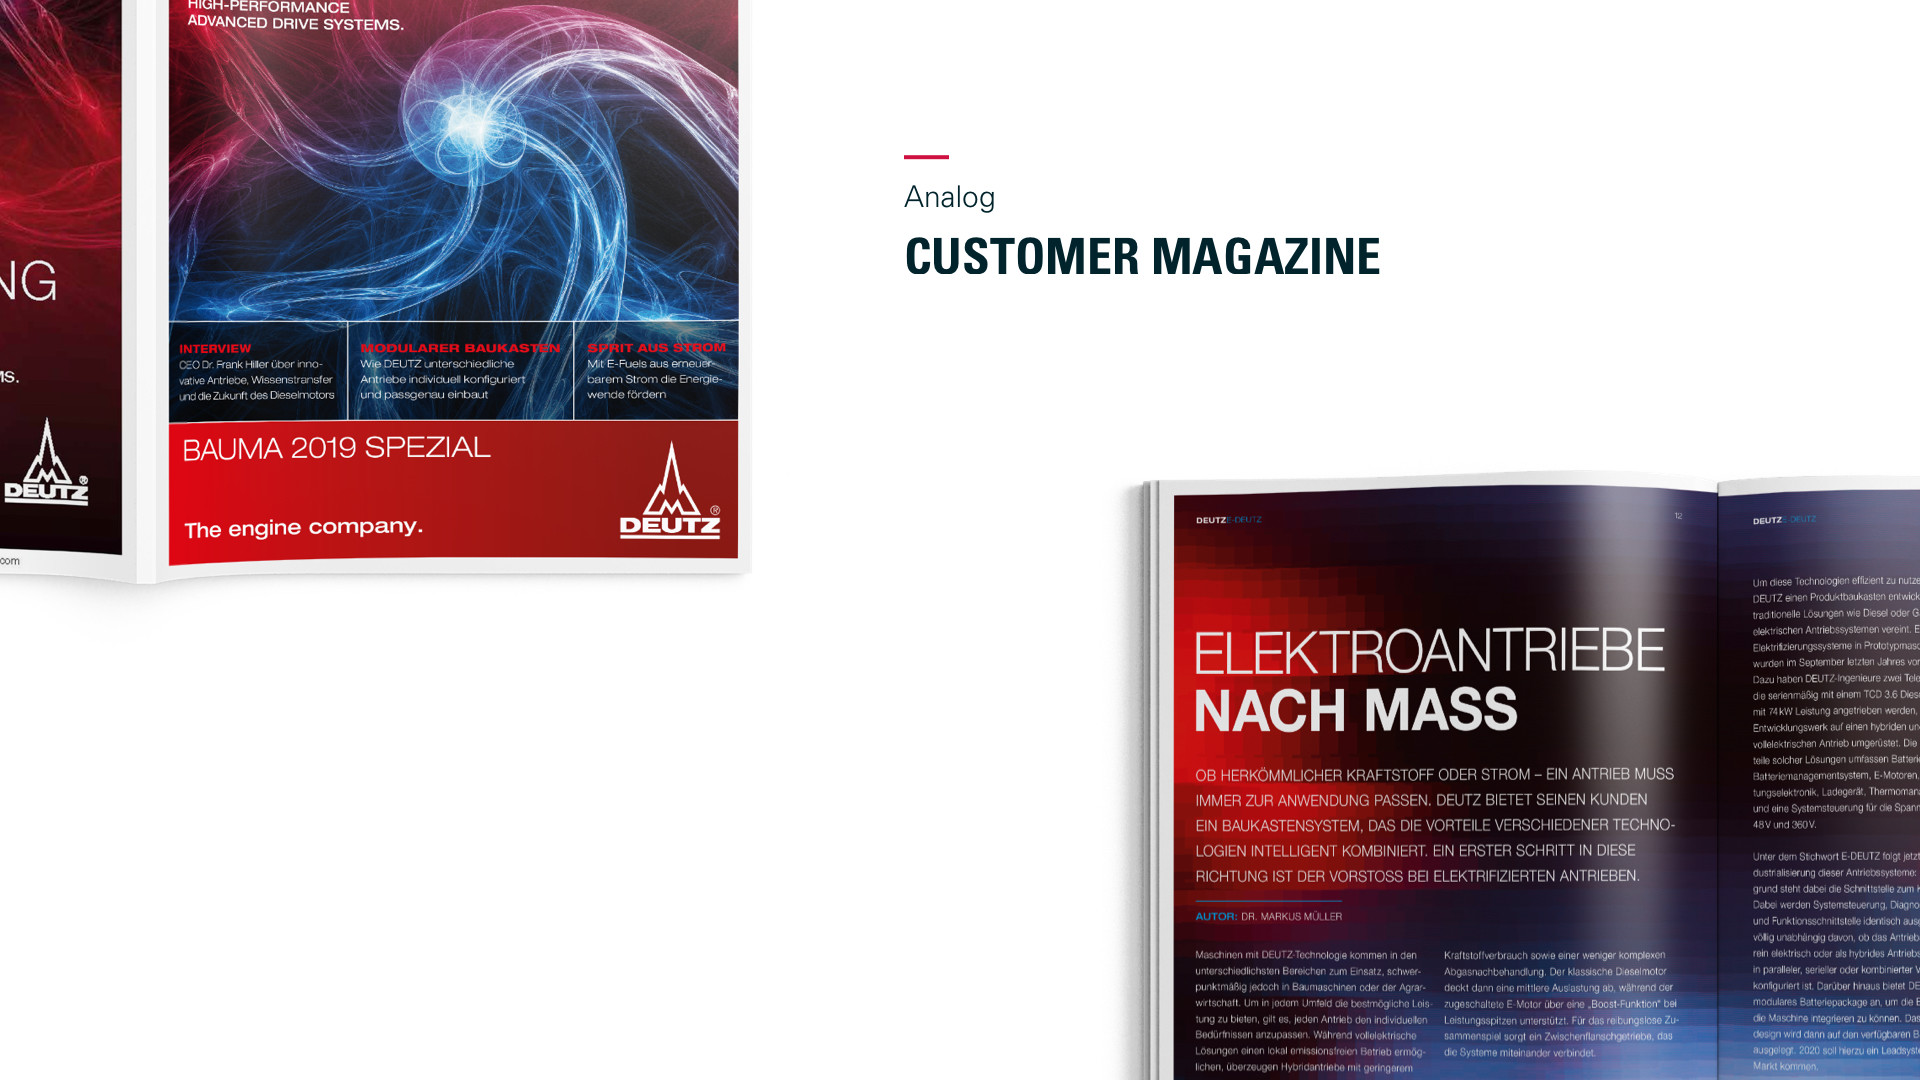 Deutz Customer Magazine 2